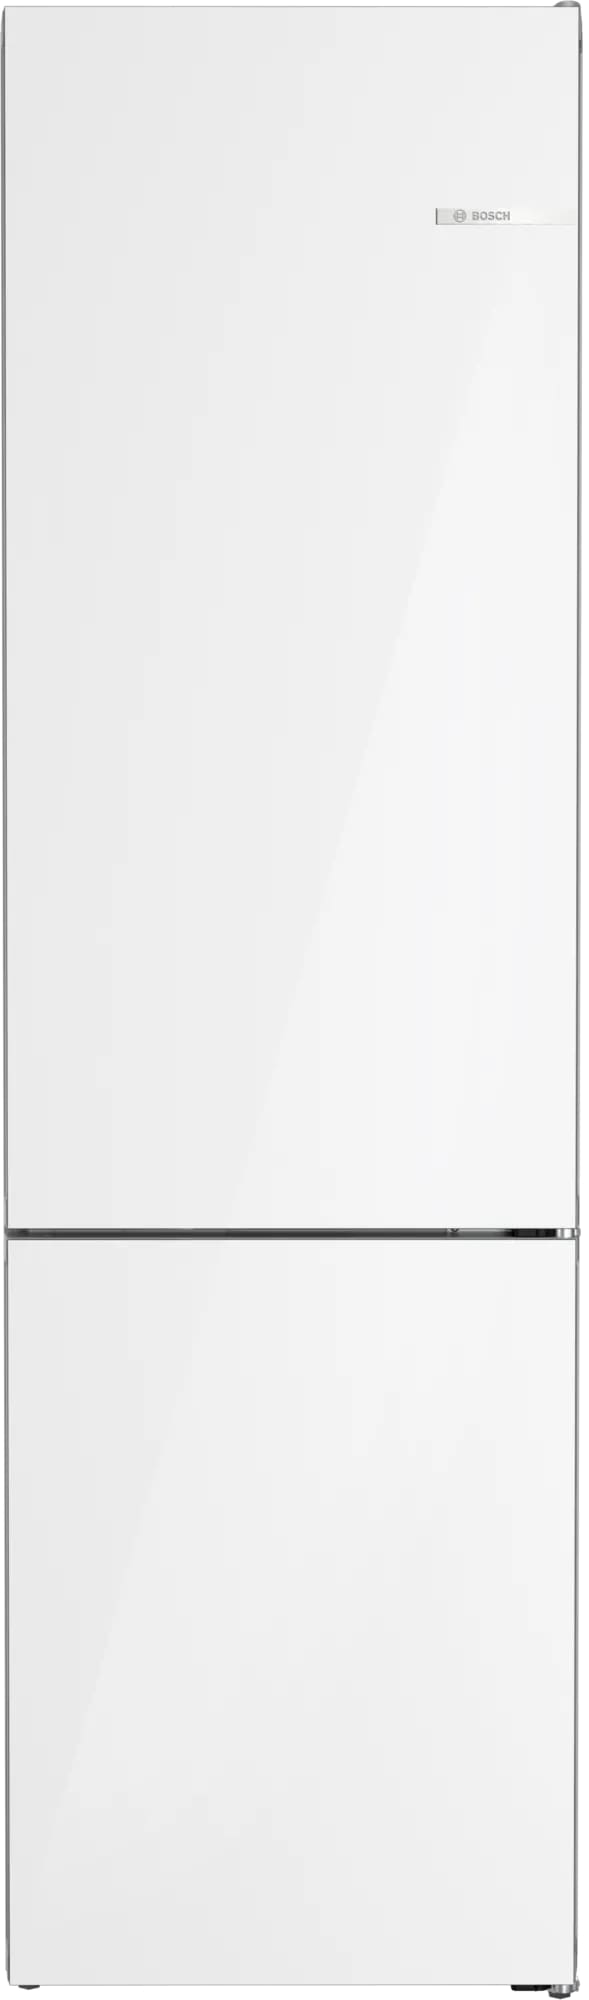 Bosch - 23.625 Inch 12.8 cu. ft Bottom Mount Refrigerator in White - B24CB80ESW